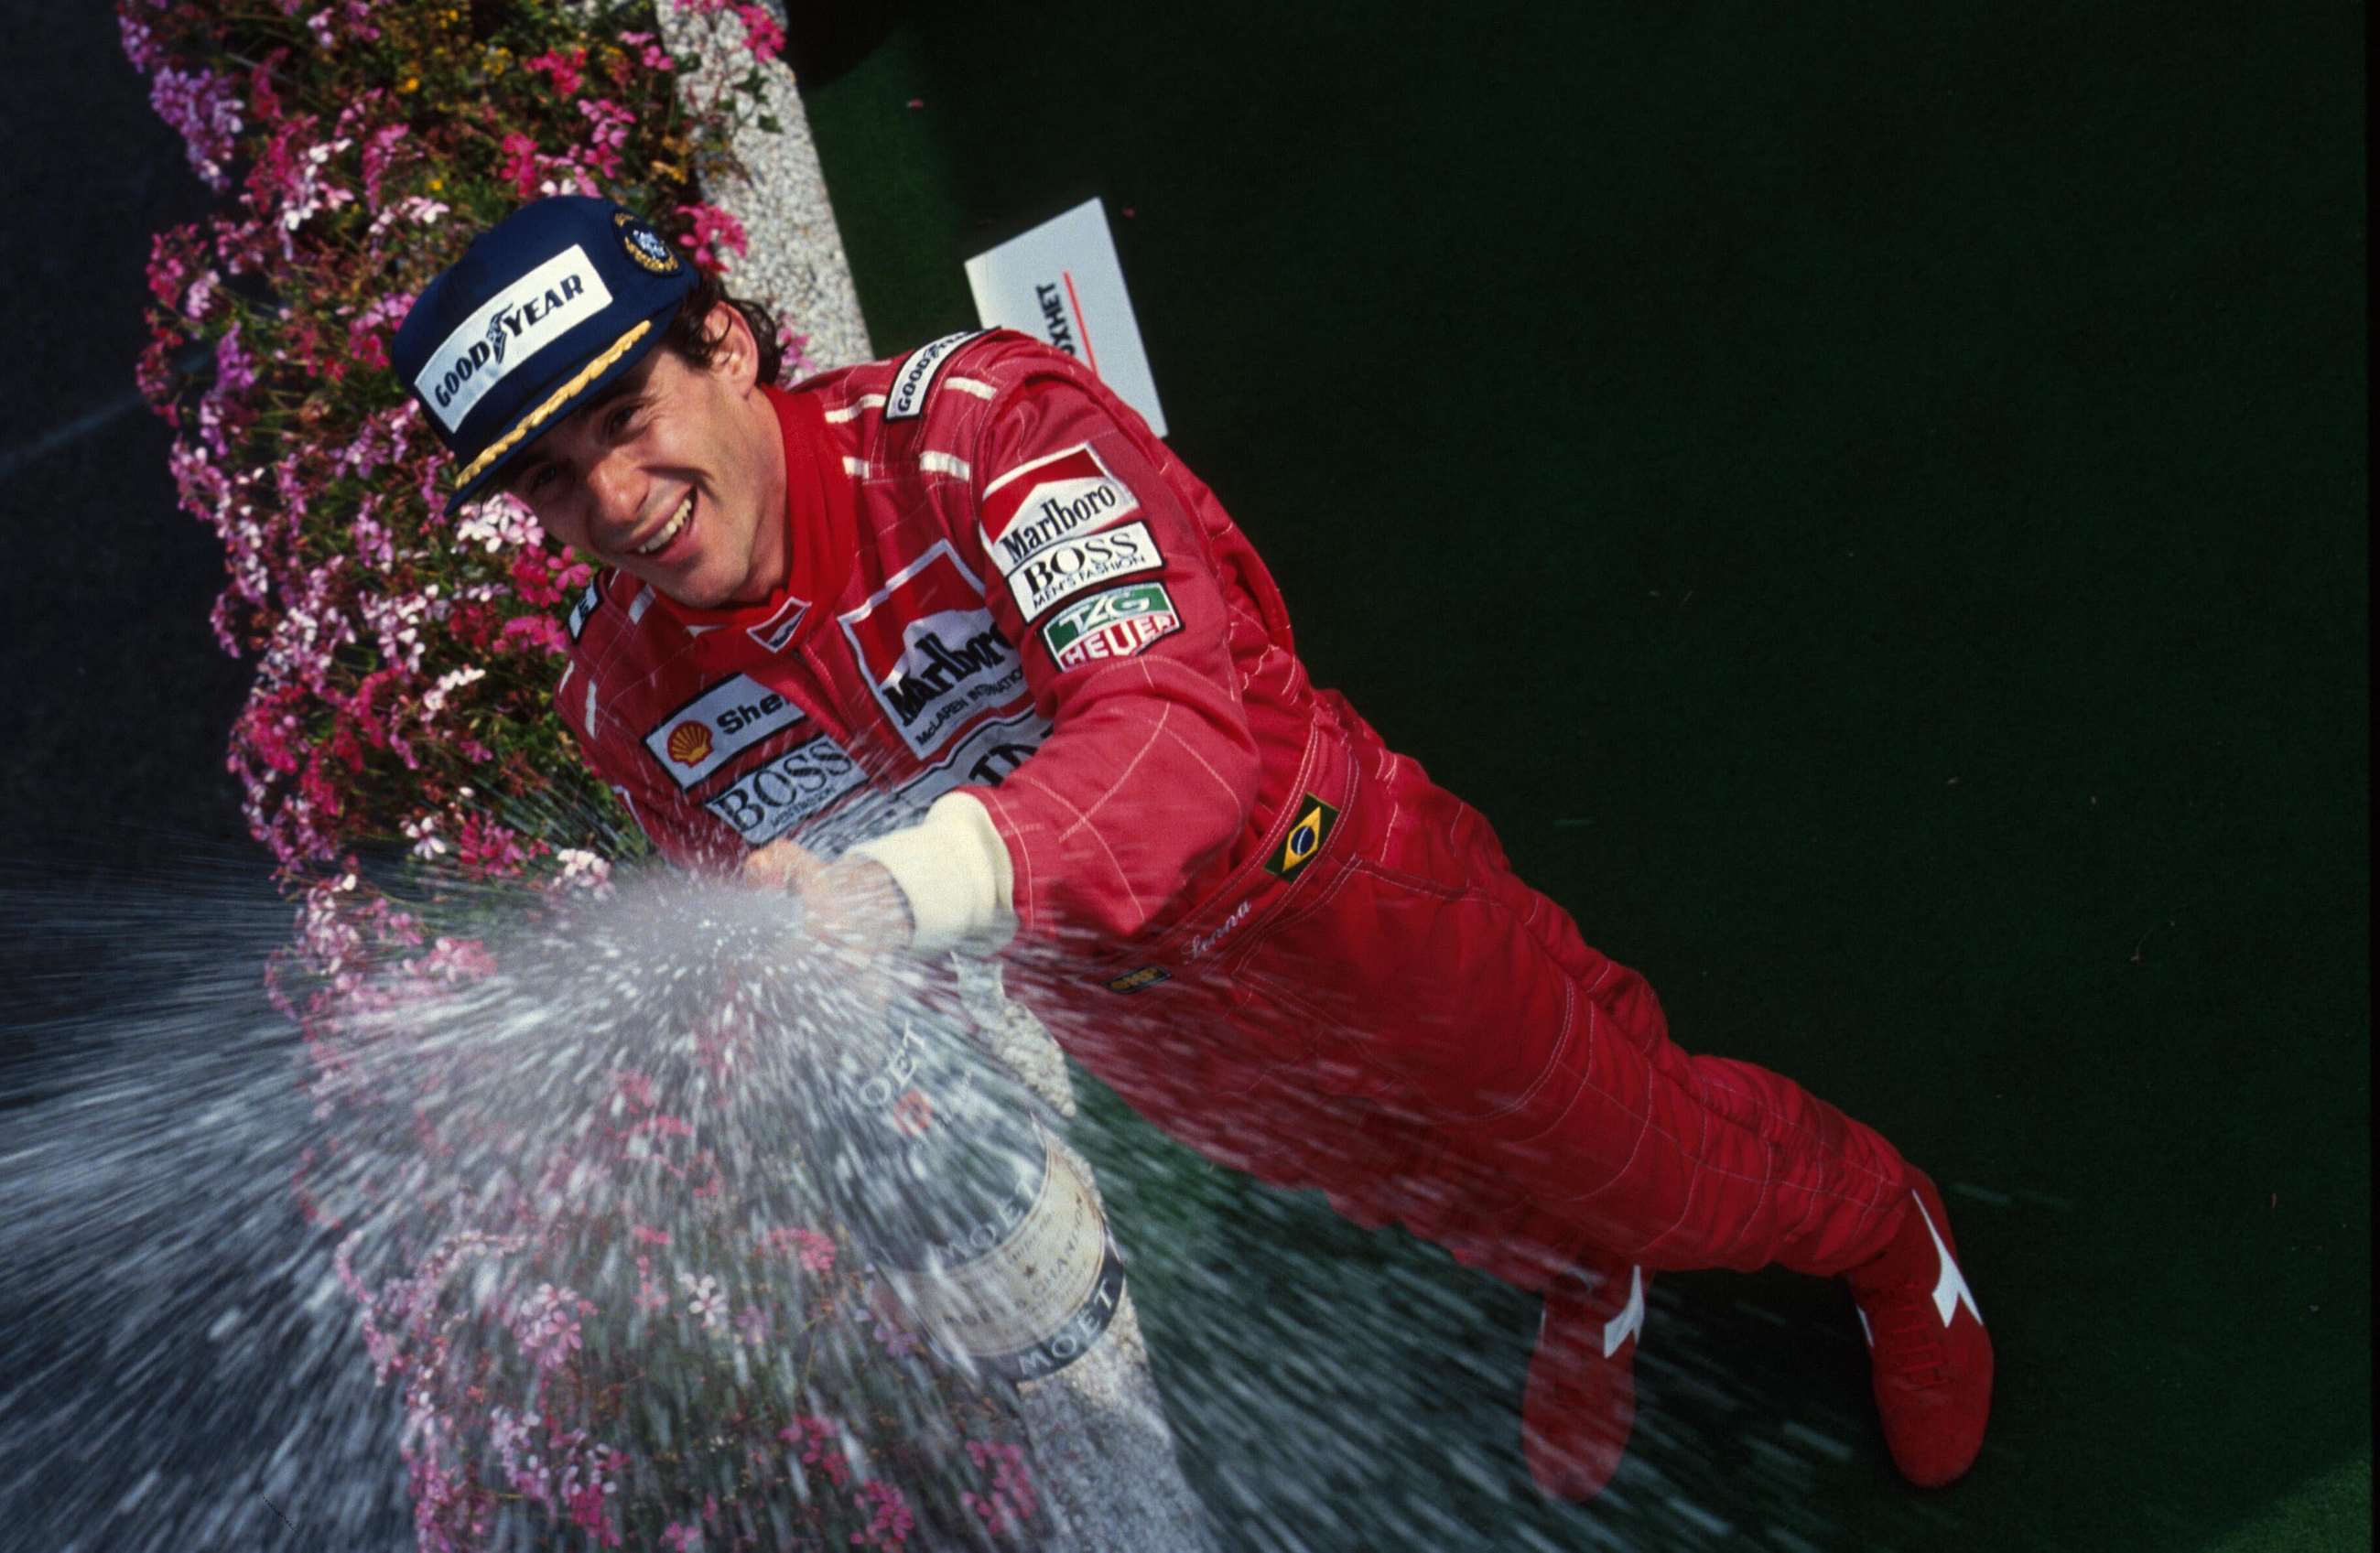 f1-1991-spa-ayrton-senna-champagne-podium-sutton-images-goodwood-03052019.jpg